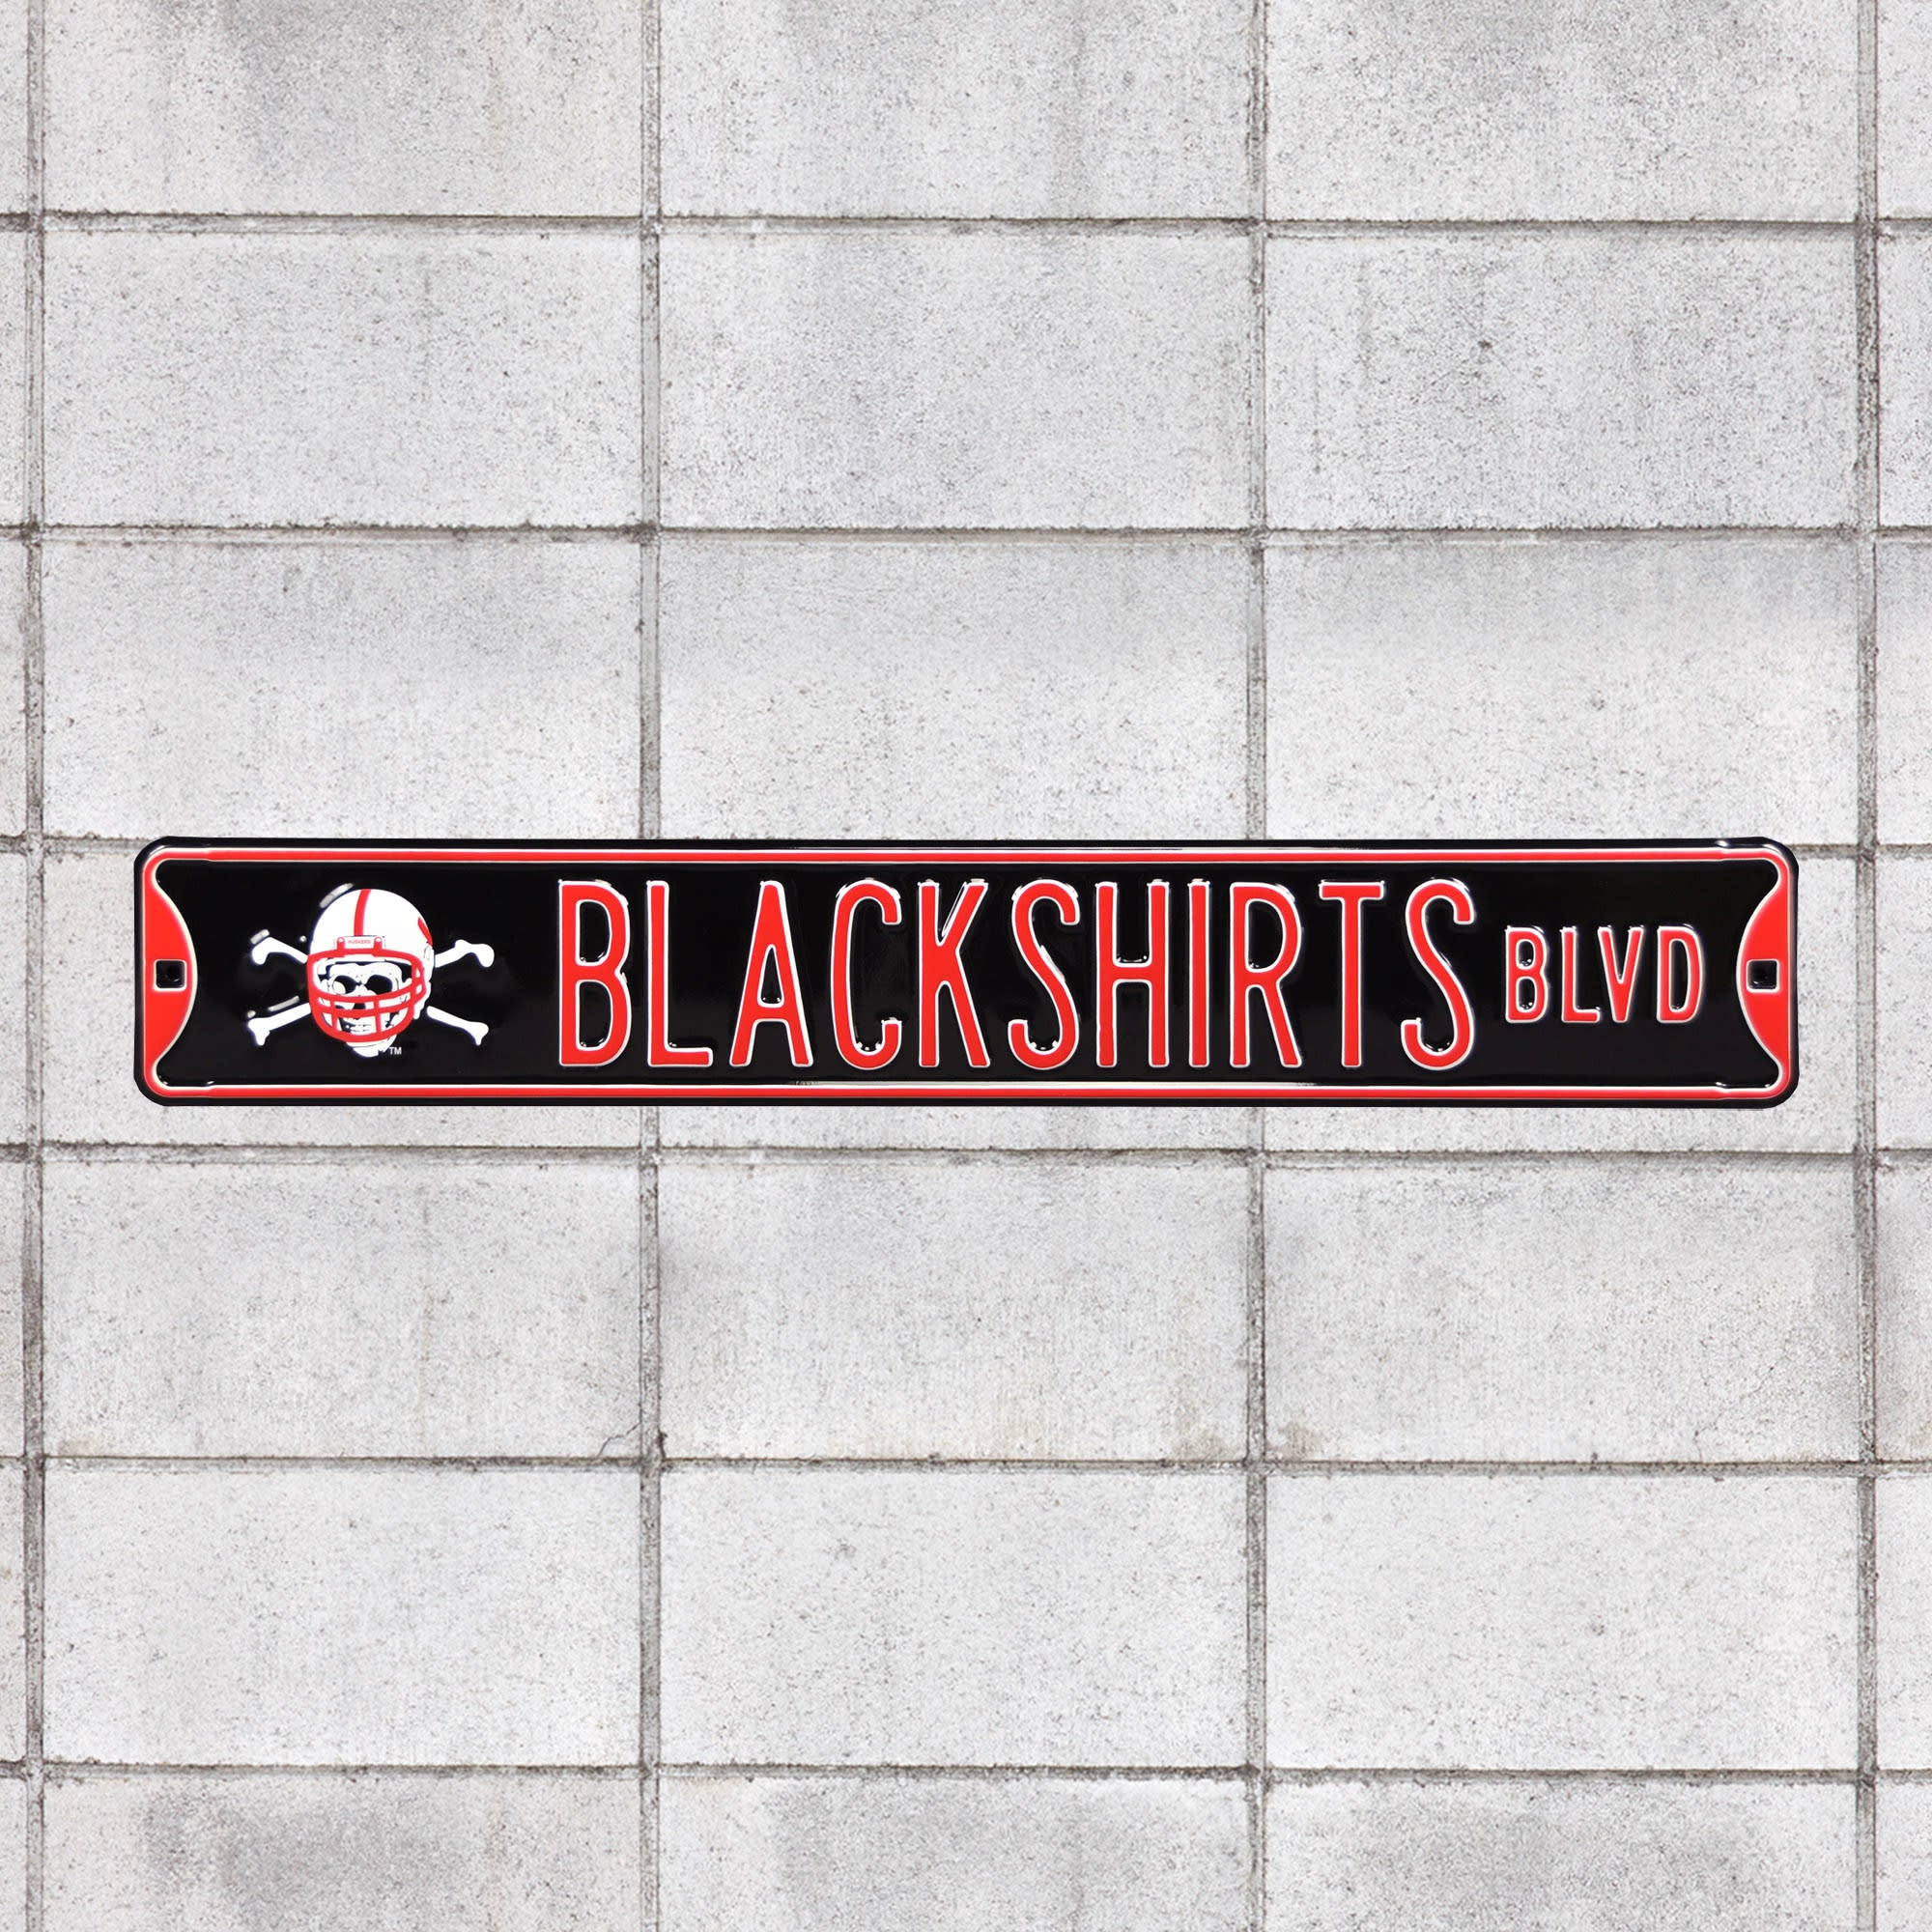 Nebraska Cornhuskers: Blackshirts Blvd - Officially Licensed Metal Street Sign 36.0"W x 6.0"H by Fathead | 100% Steel